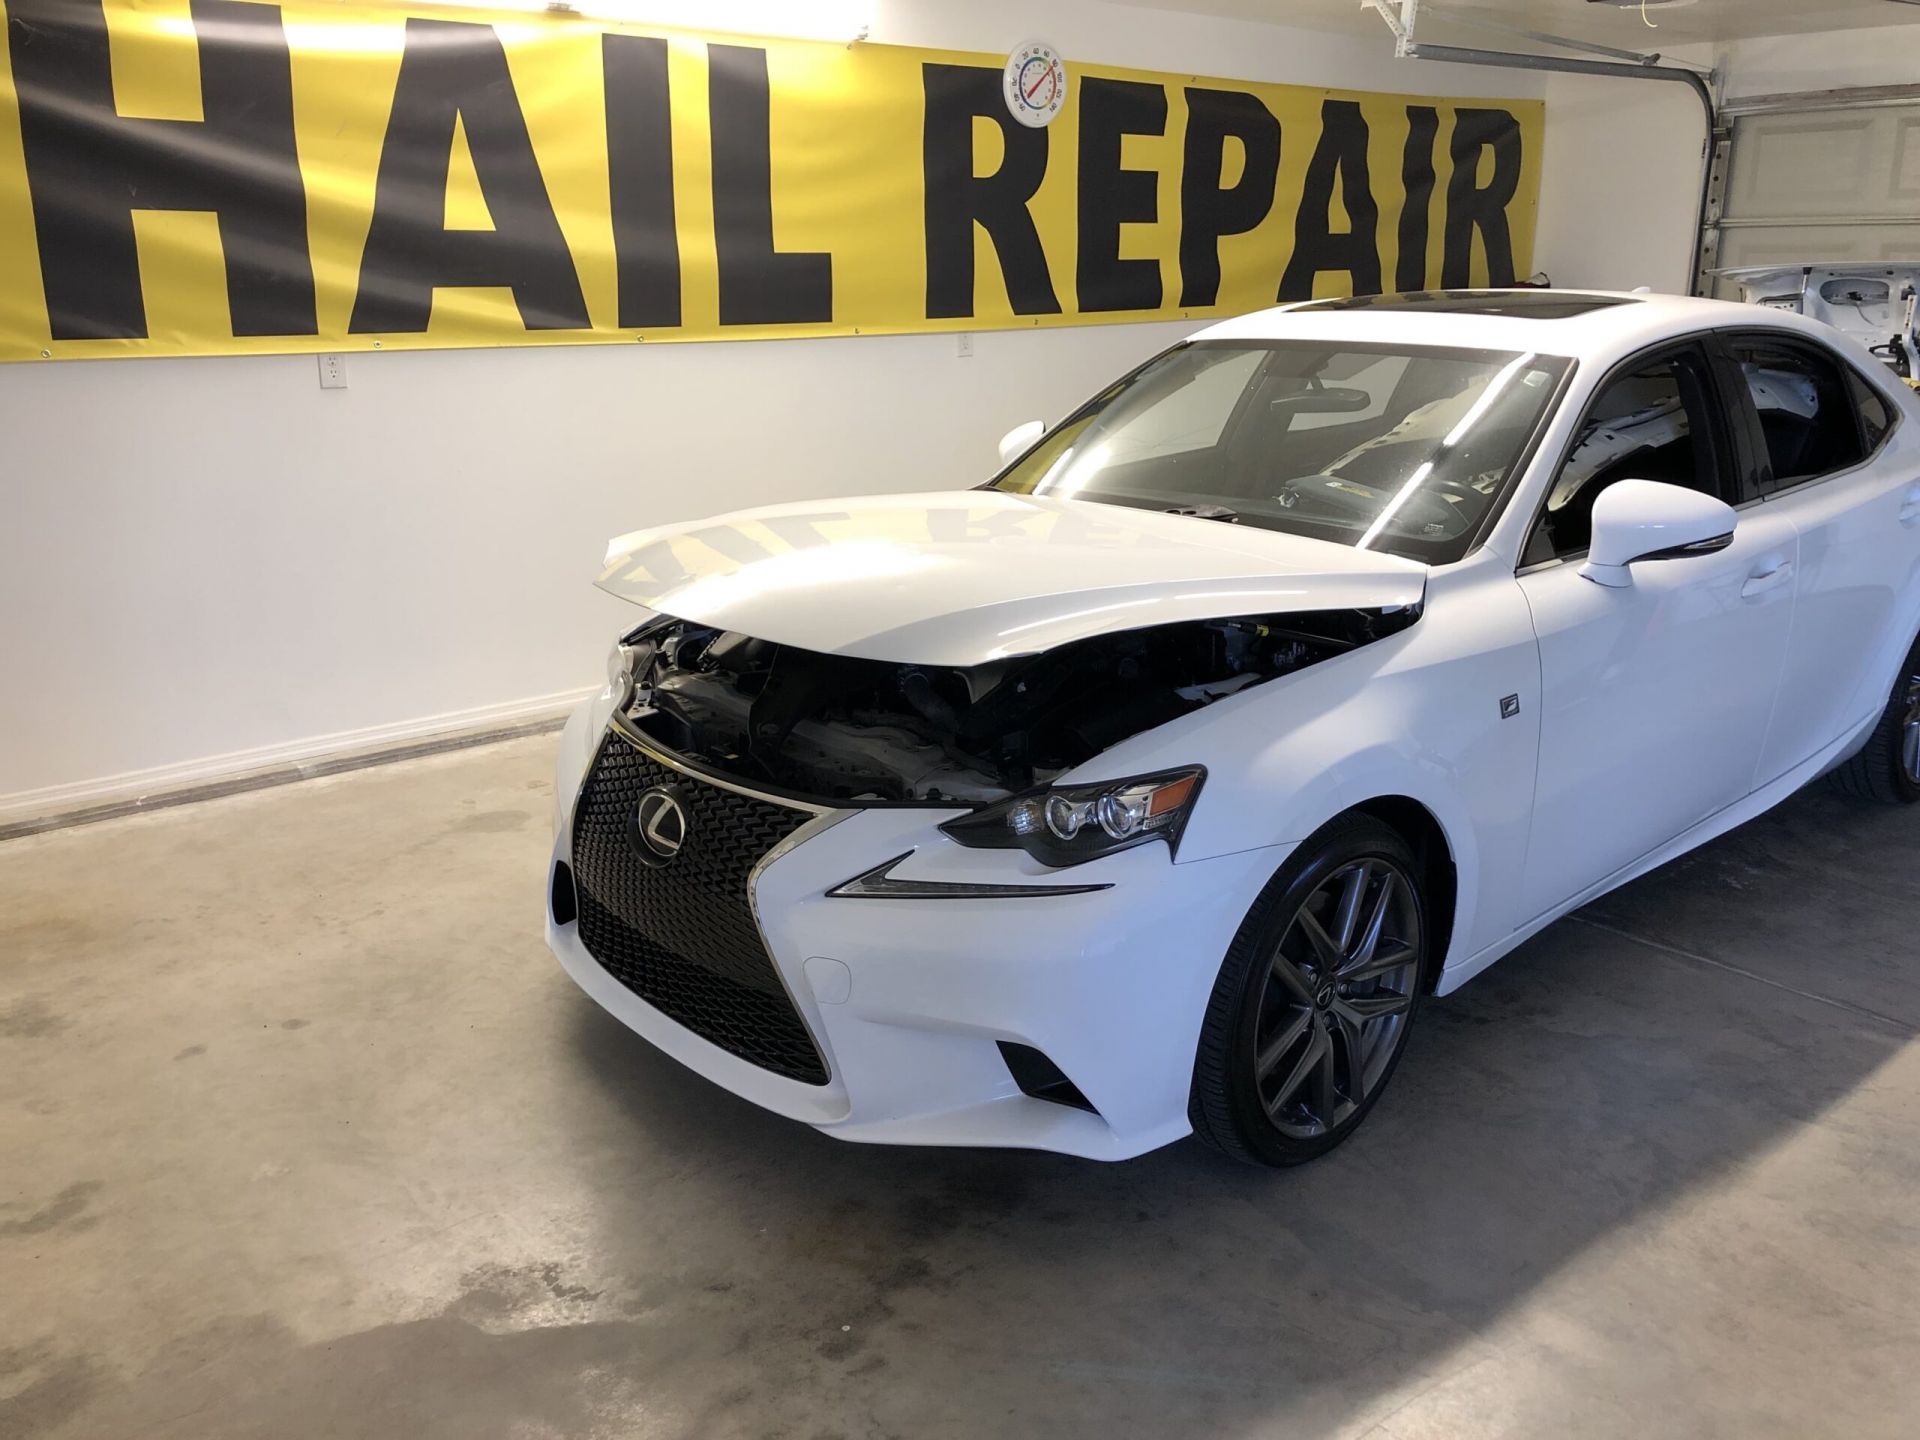 Auto Hail Repair Being Done On Lexus